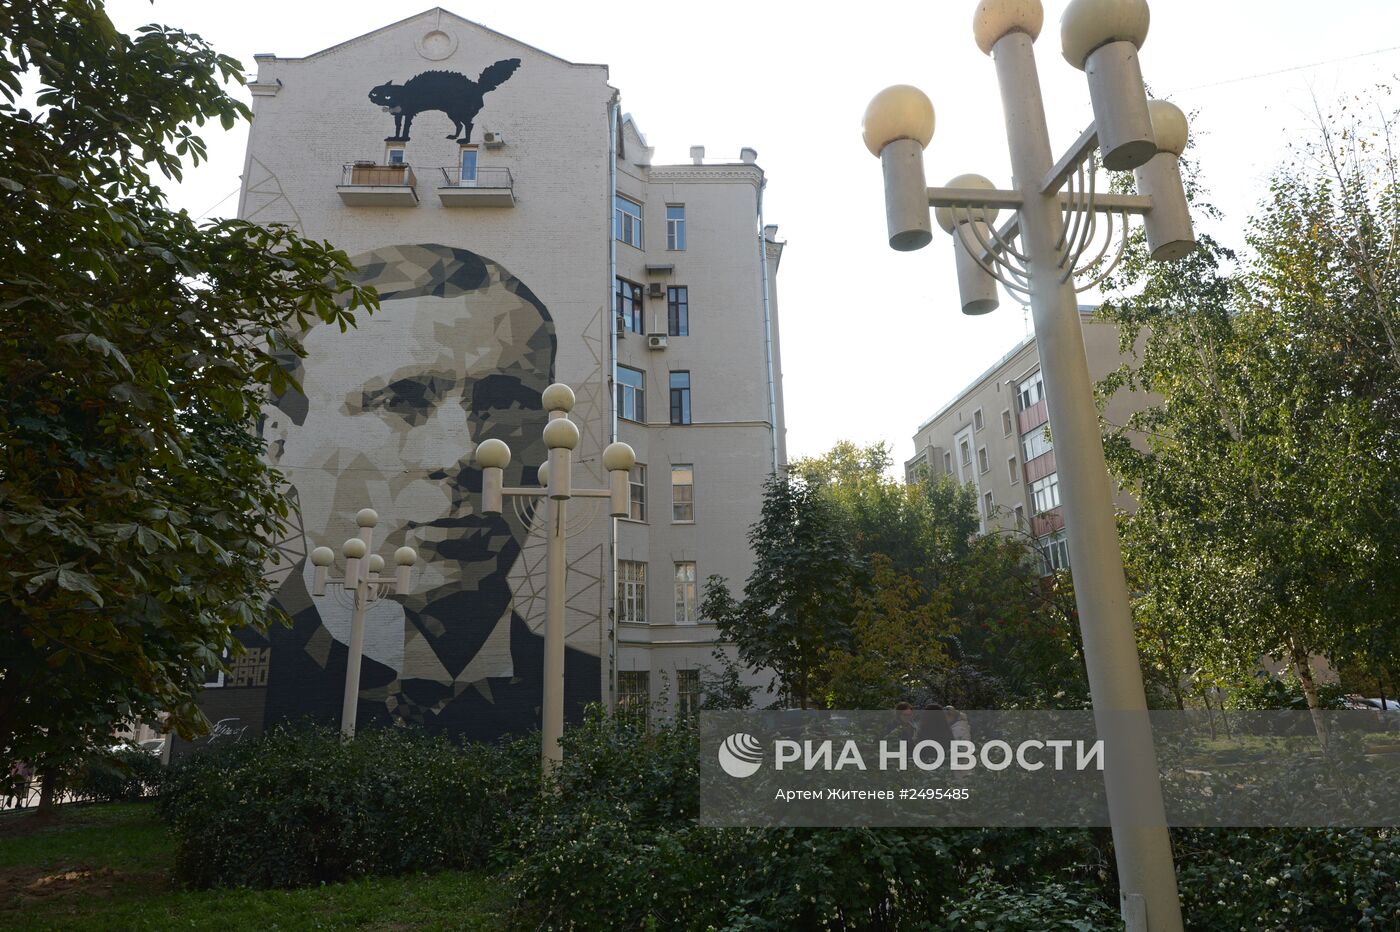 Портрет М.А. Булгакова на фасаде дома в Москве